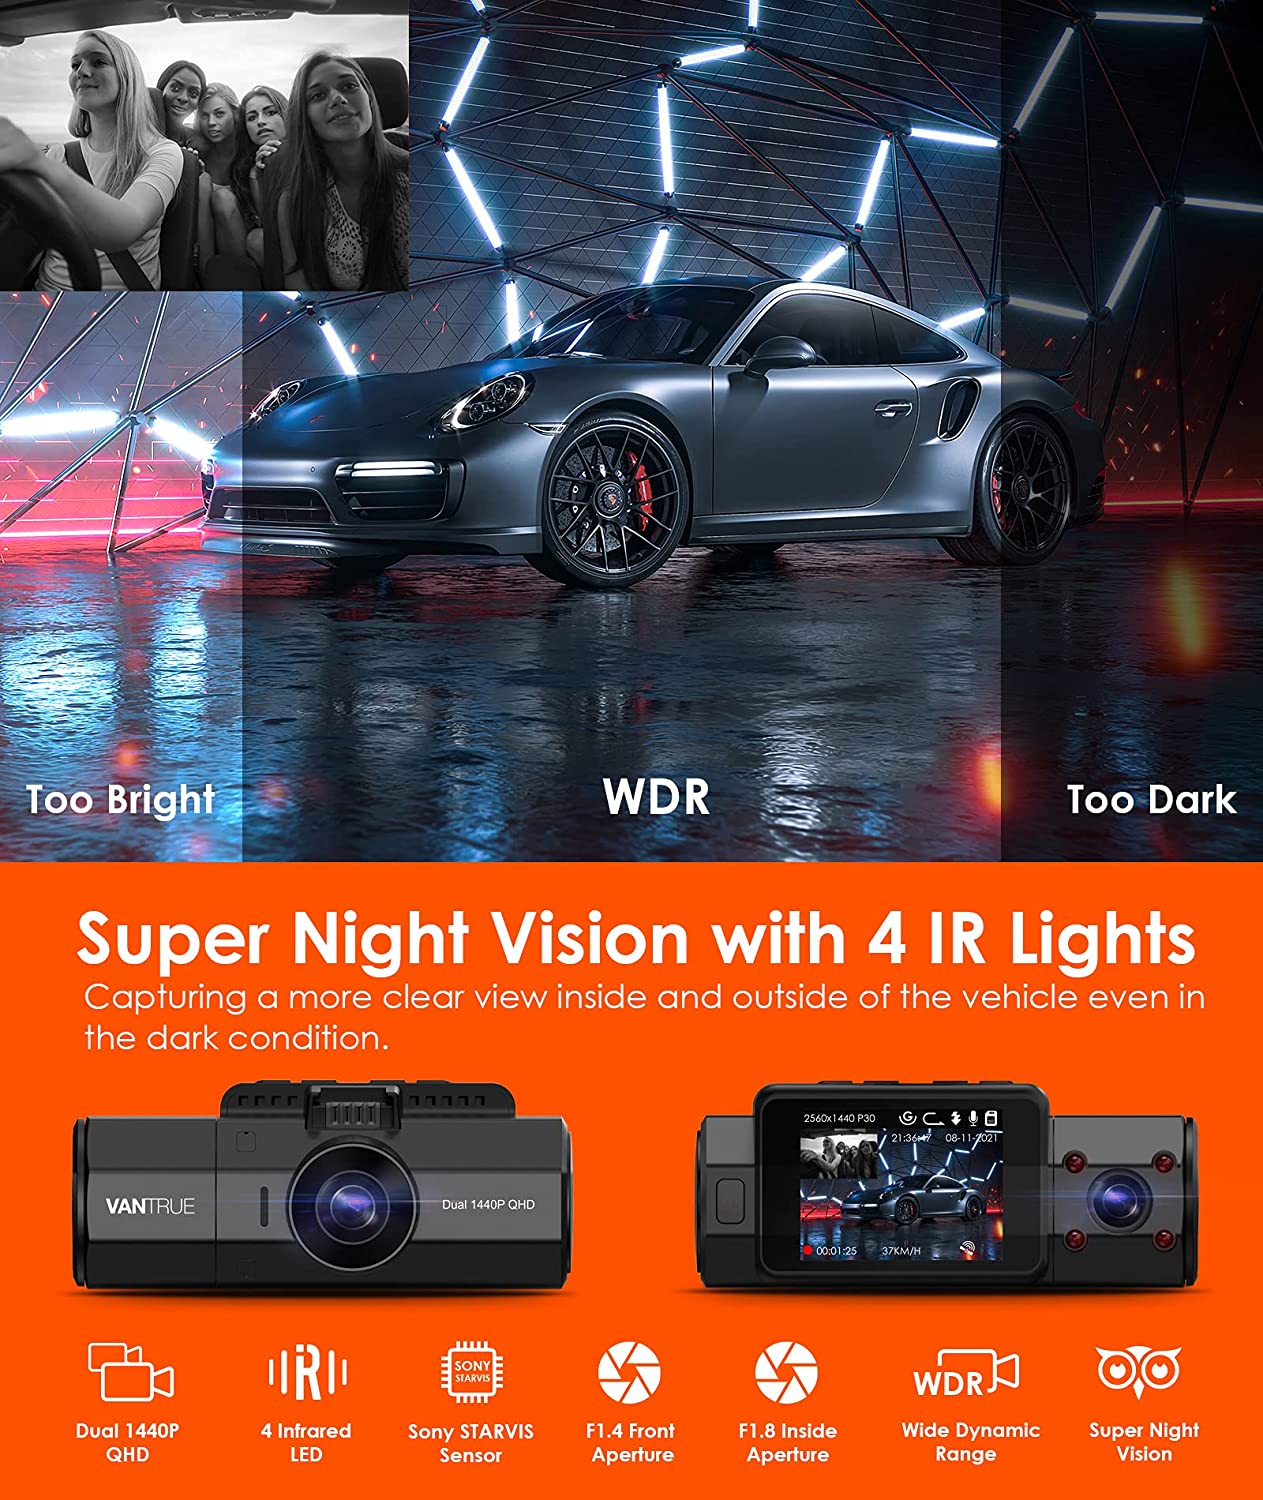 Vantrue N2S Dual Lens 4K Dash Cam for Front and Interior Recording